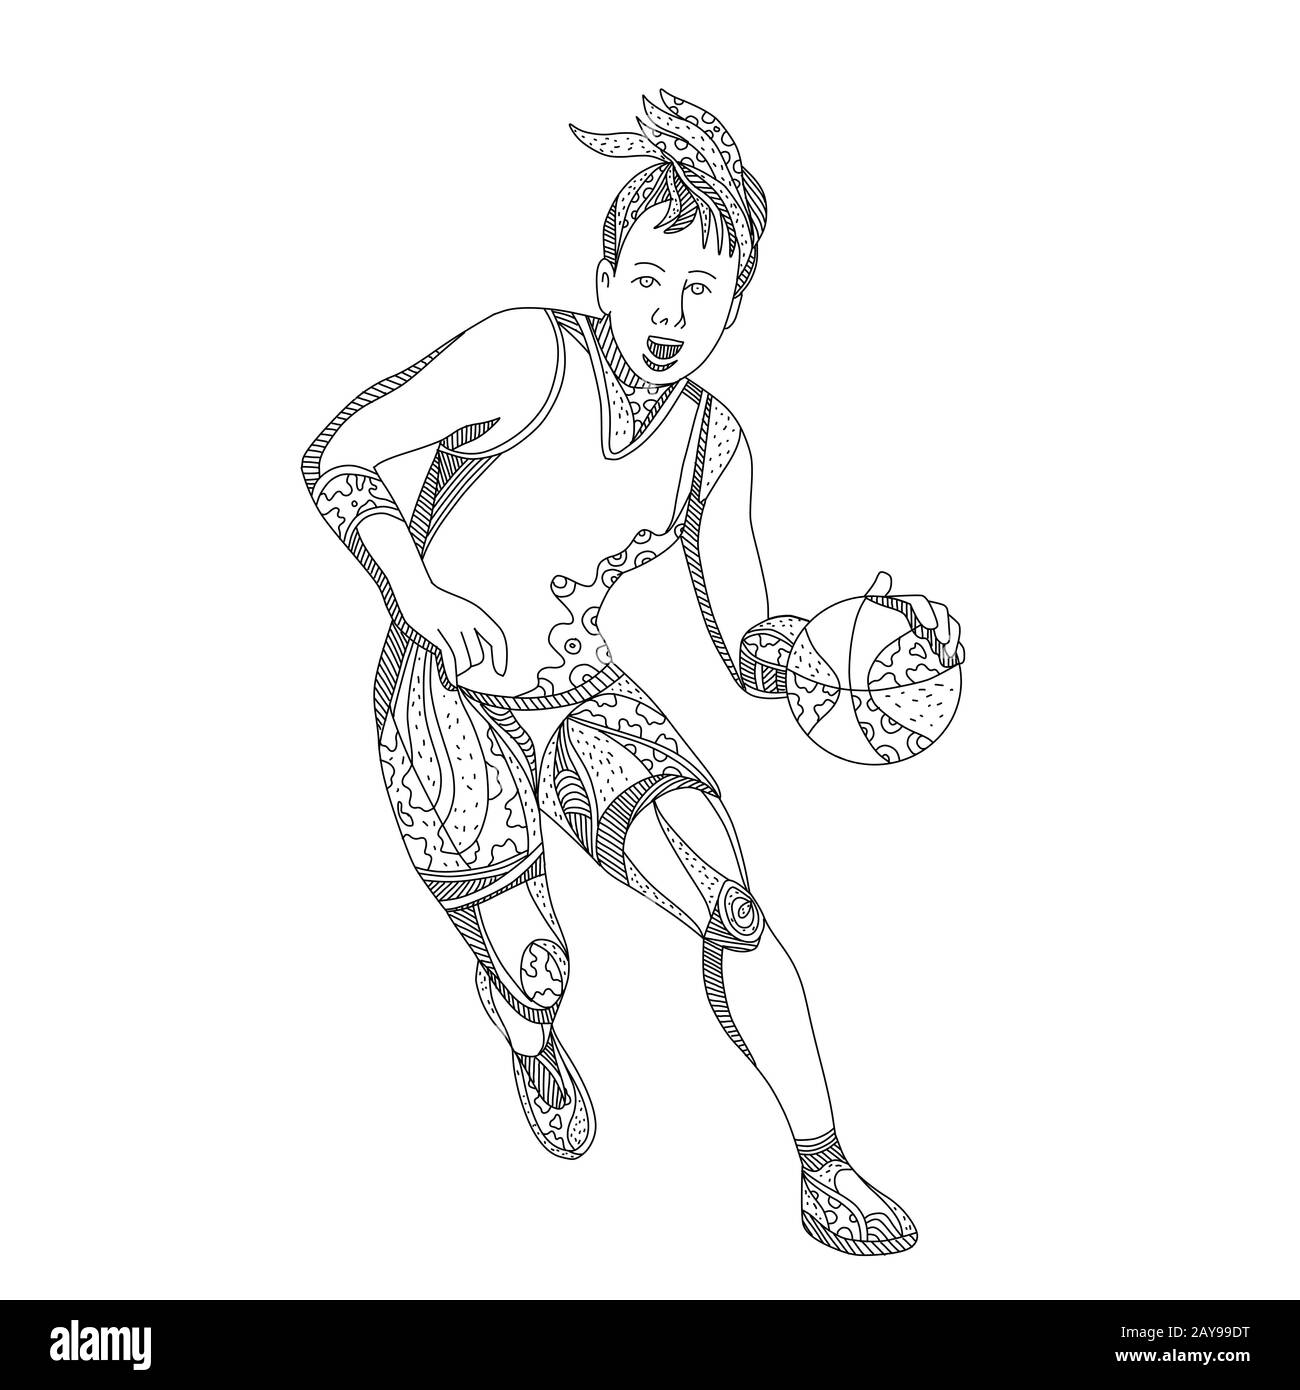 Female Basketball Player Doodle Art Stock Photo